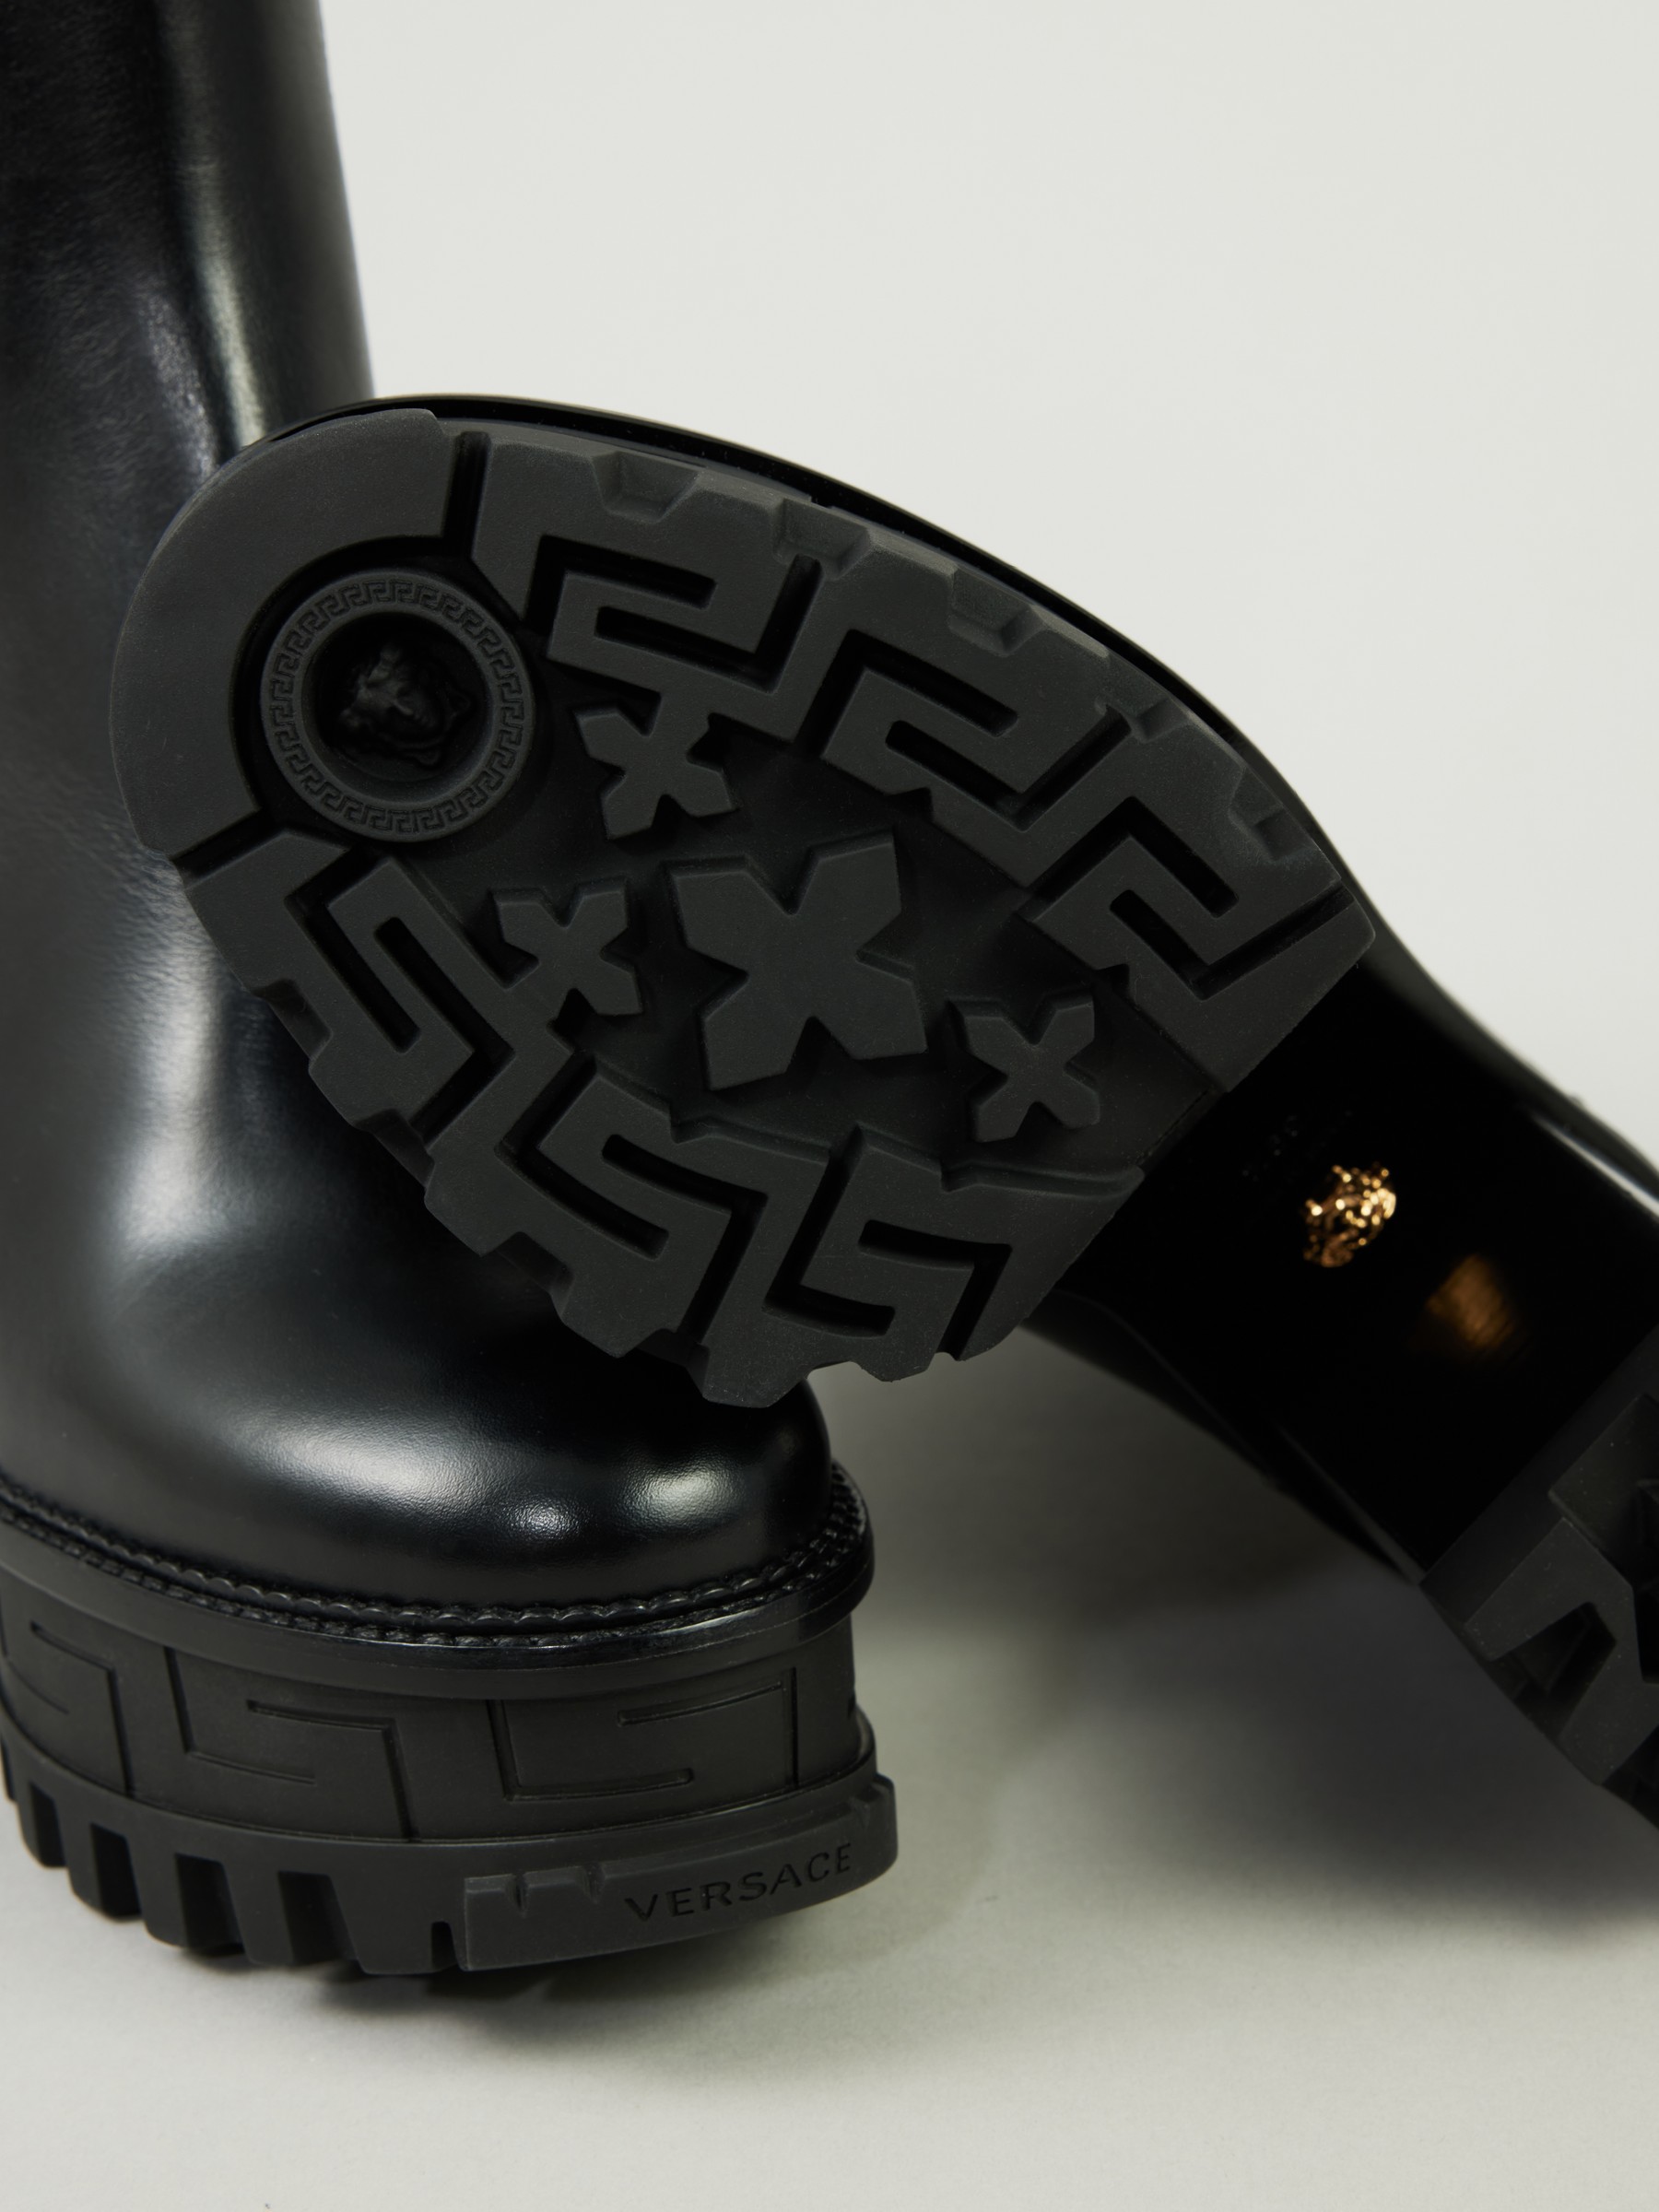 dwaas Verhogen Sicilië Versace Ankle boots 'Greca Labyrinth' Black | Chelsea & Ankle Boots